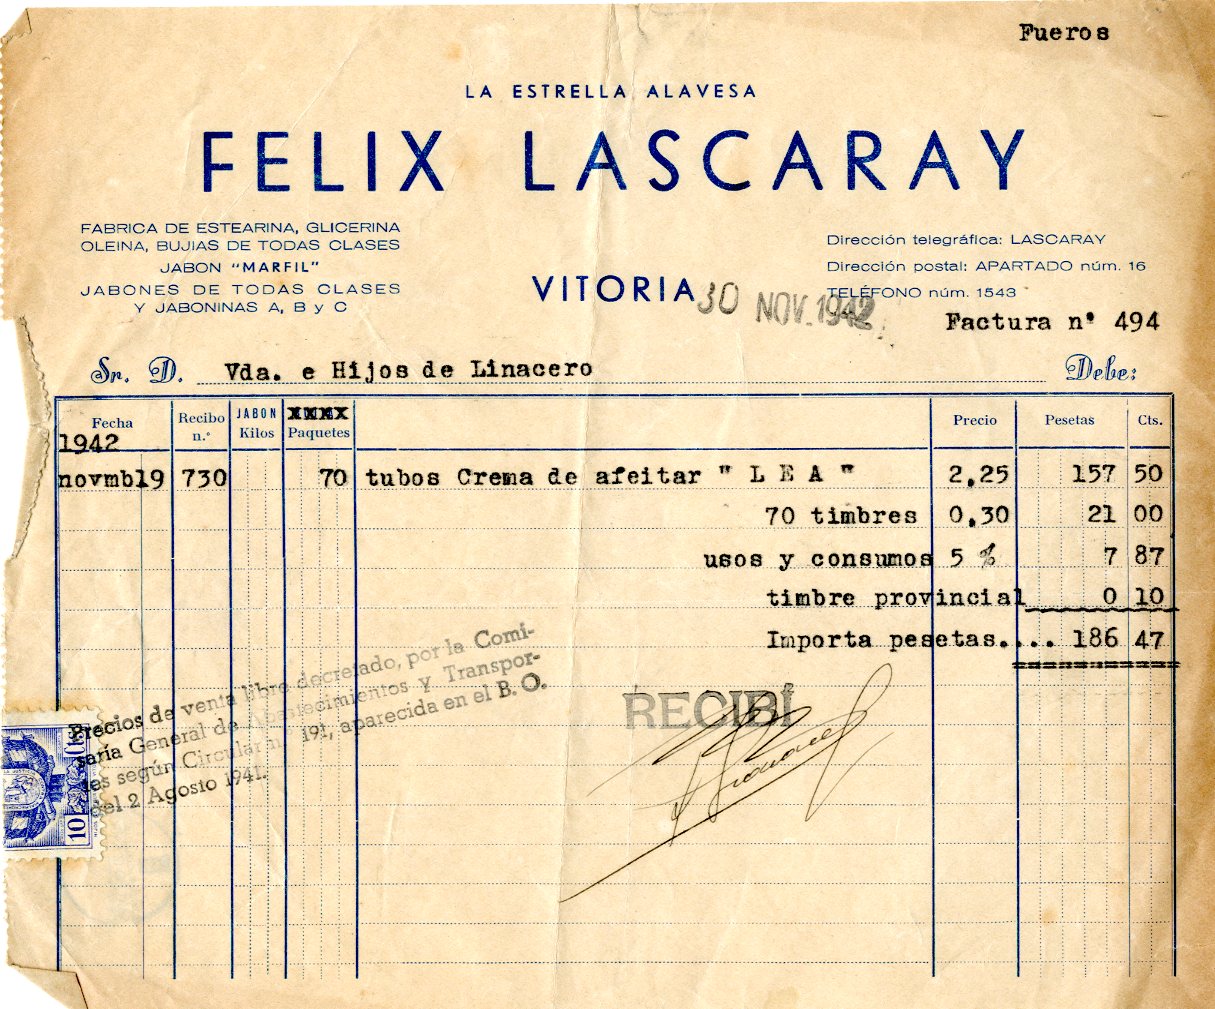 Félix Lascaray "La estrella alavesa"